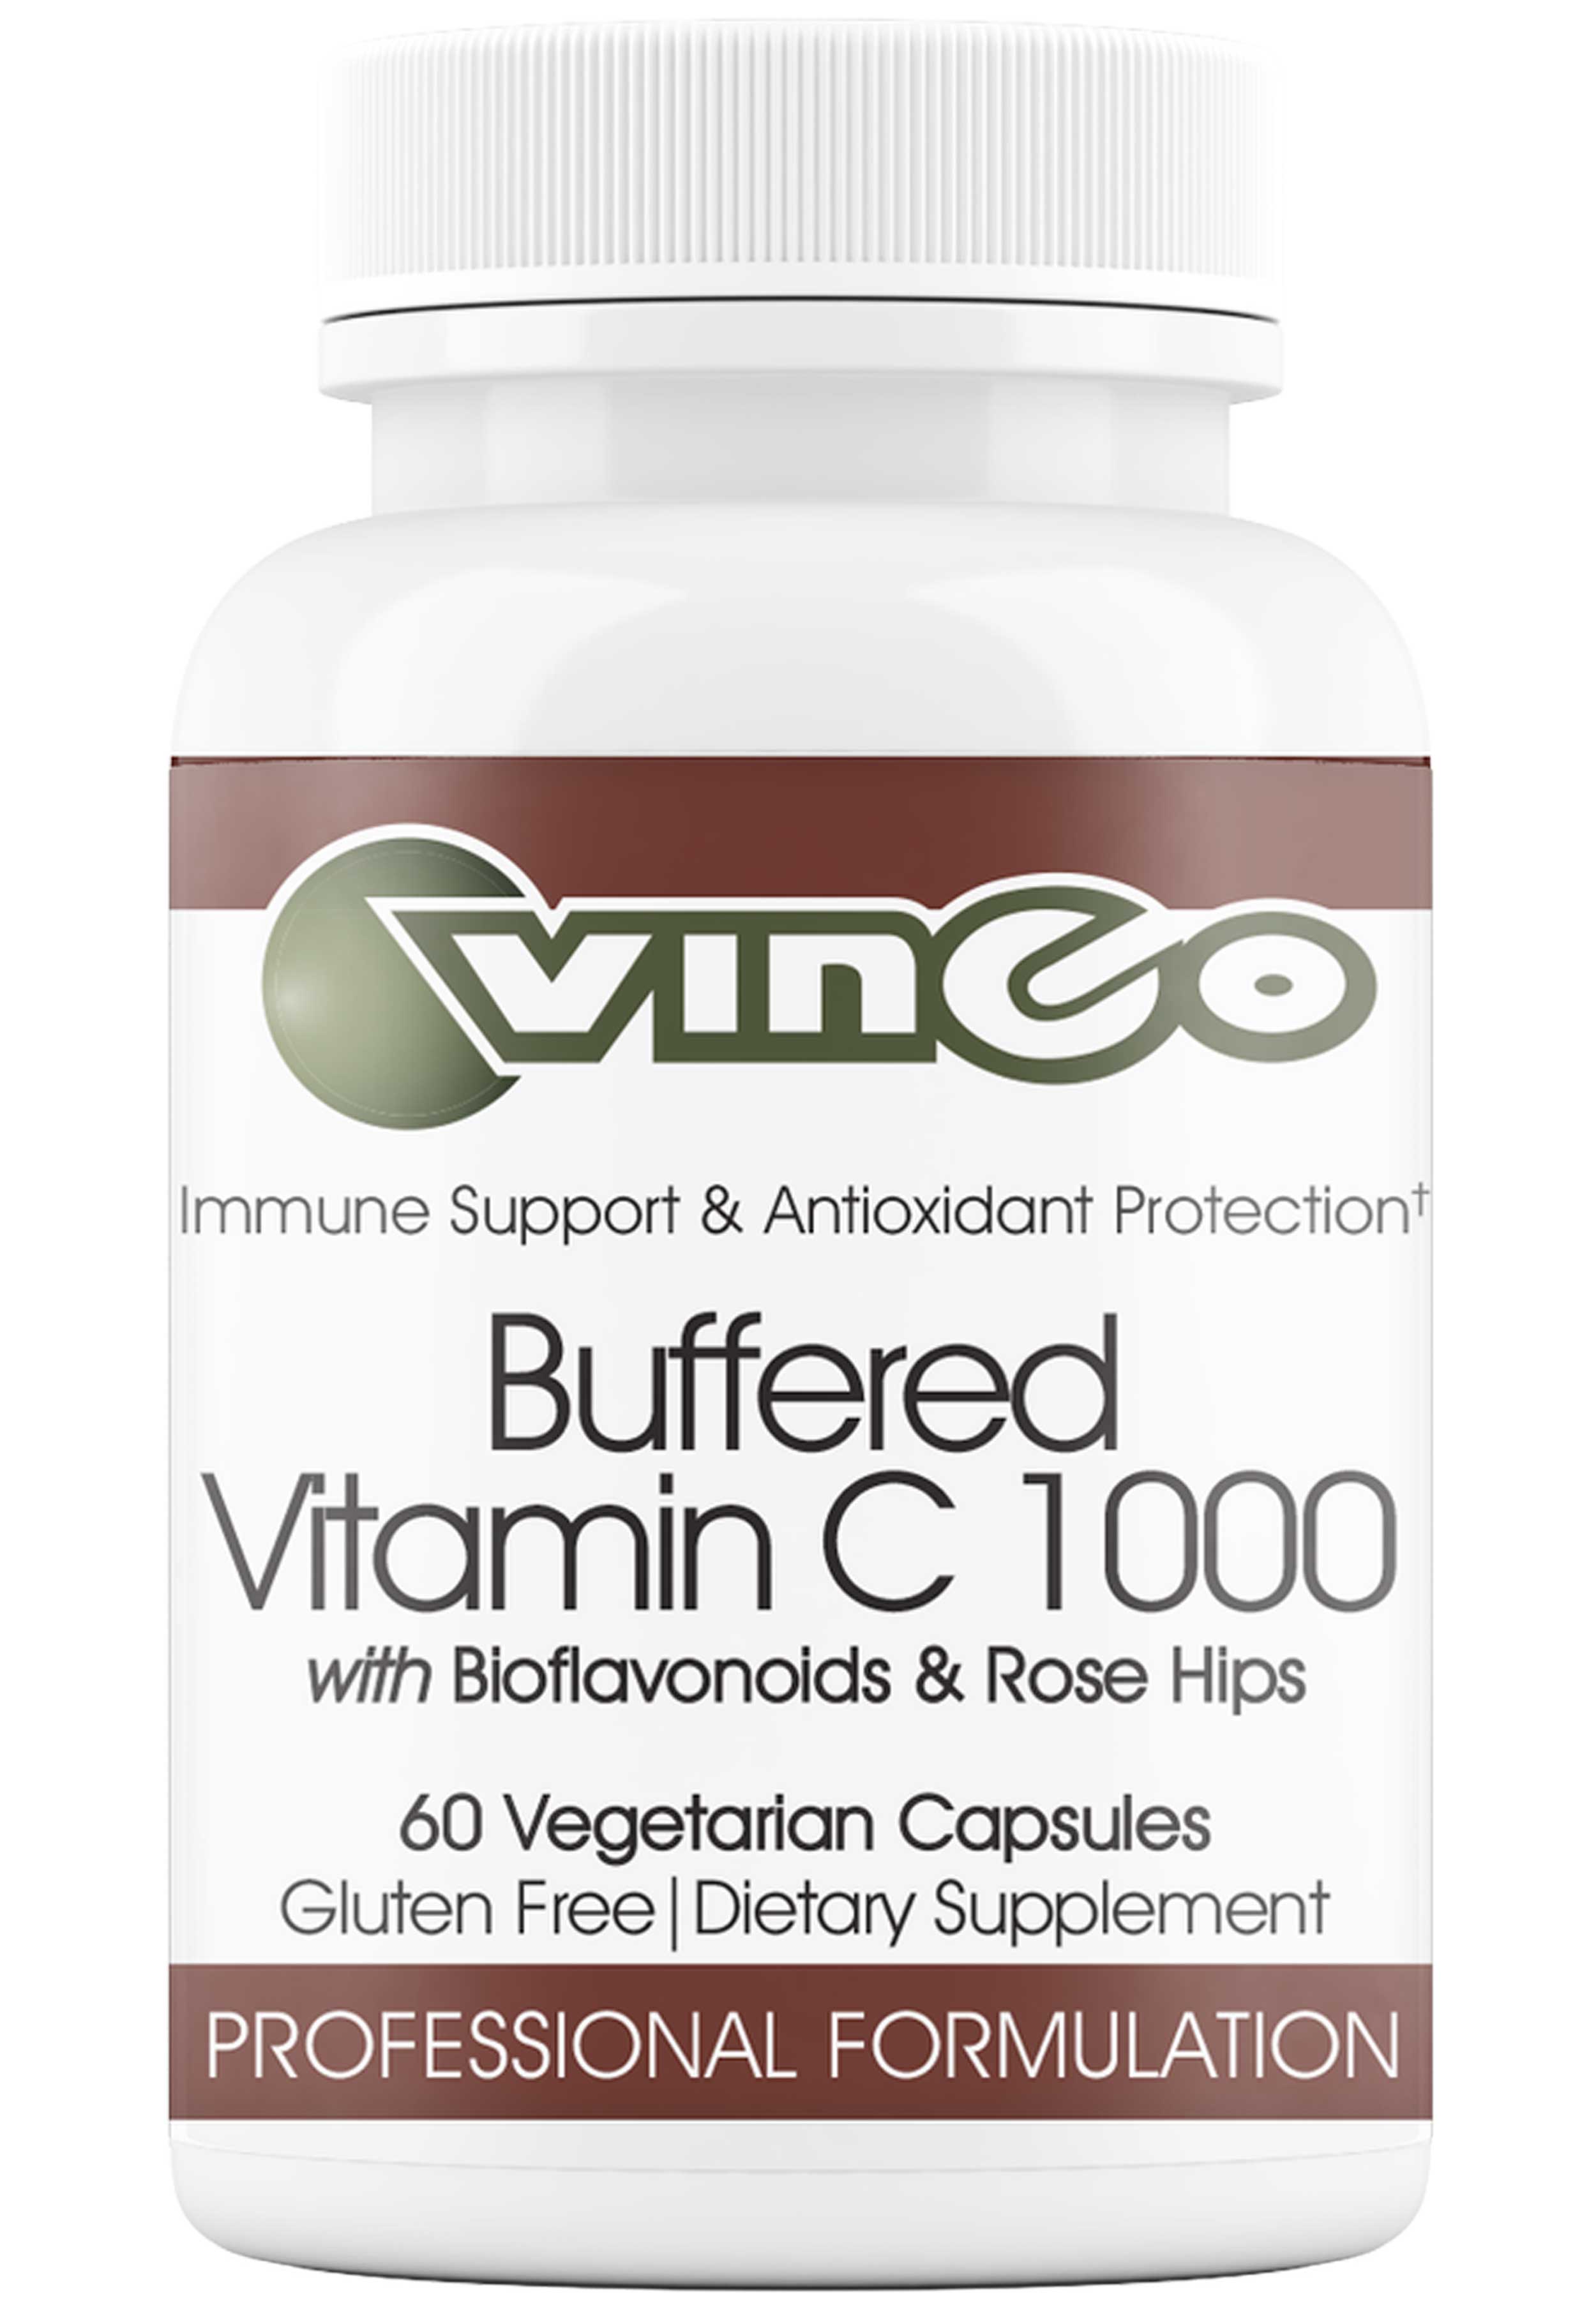 Vinco Buffered Vitamin C 1000